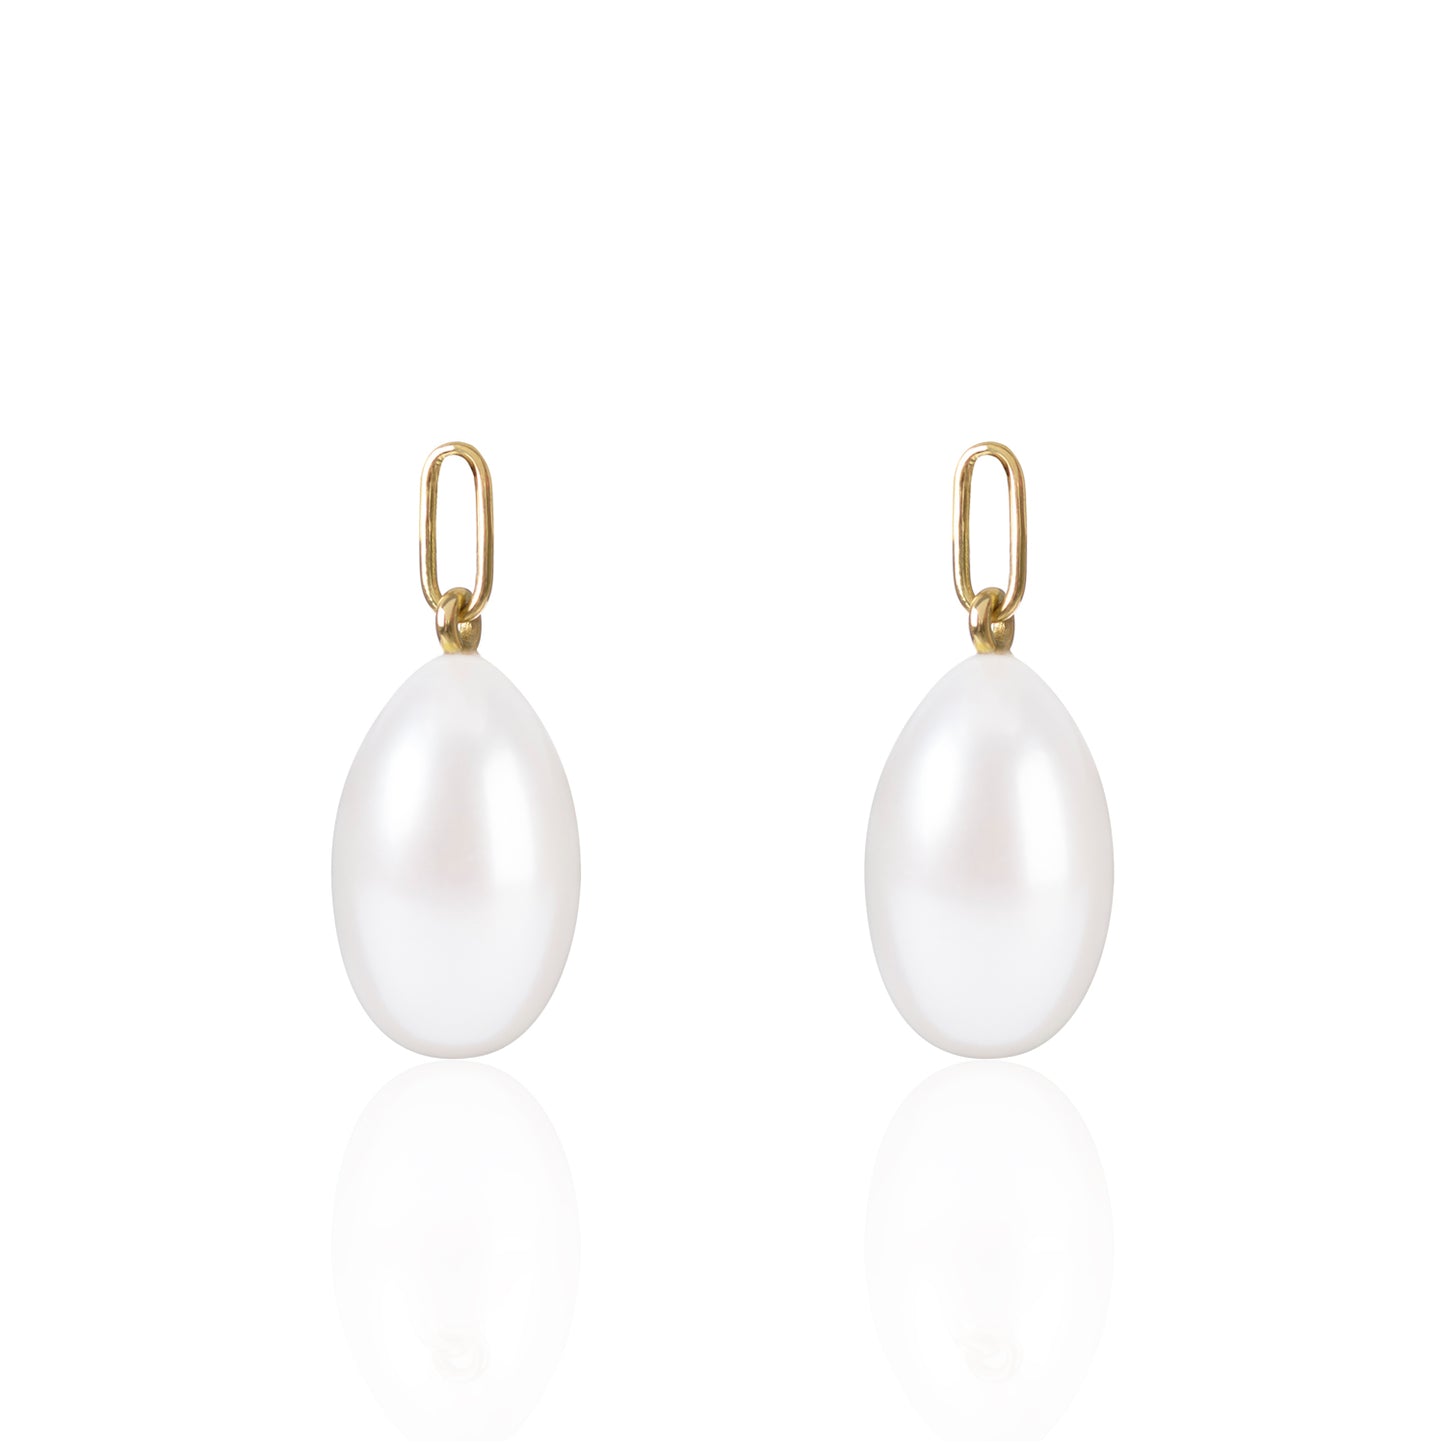 Elongated White Pearl Earring Pendants by McFarlane Fine Jewellery